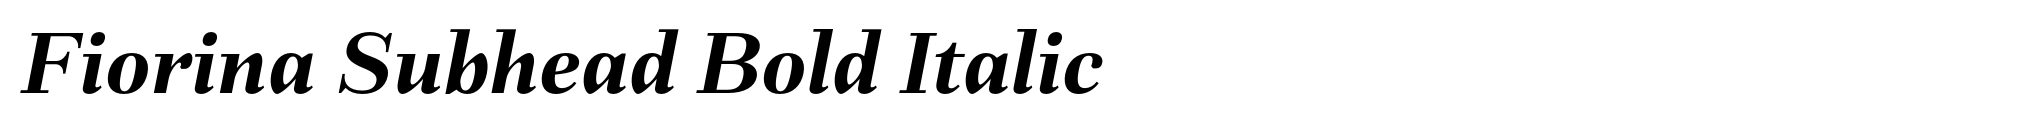 Fiorina Subhead Bold Italic image